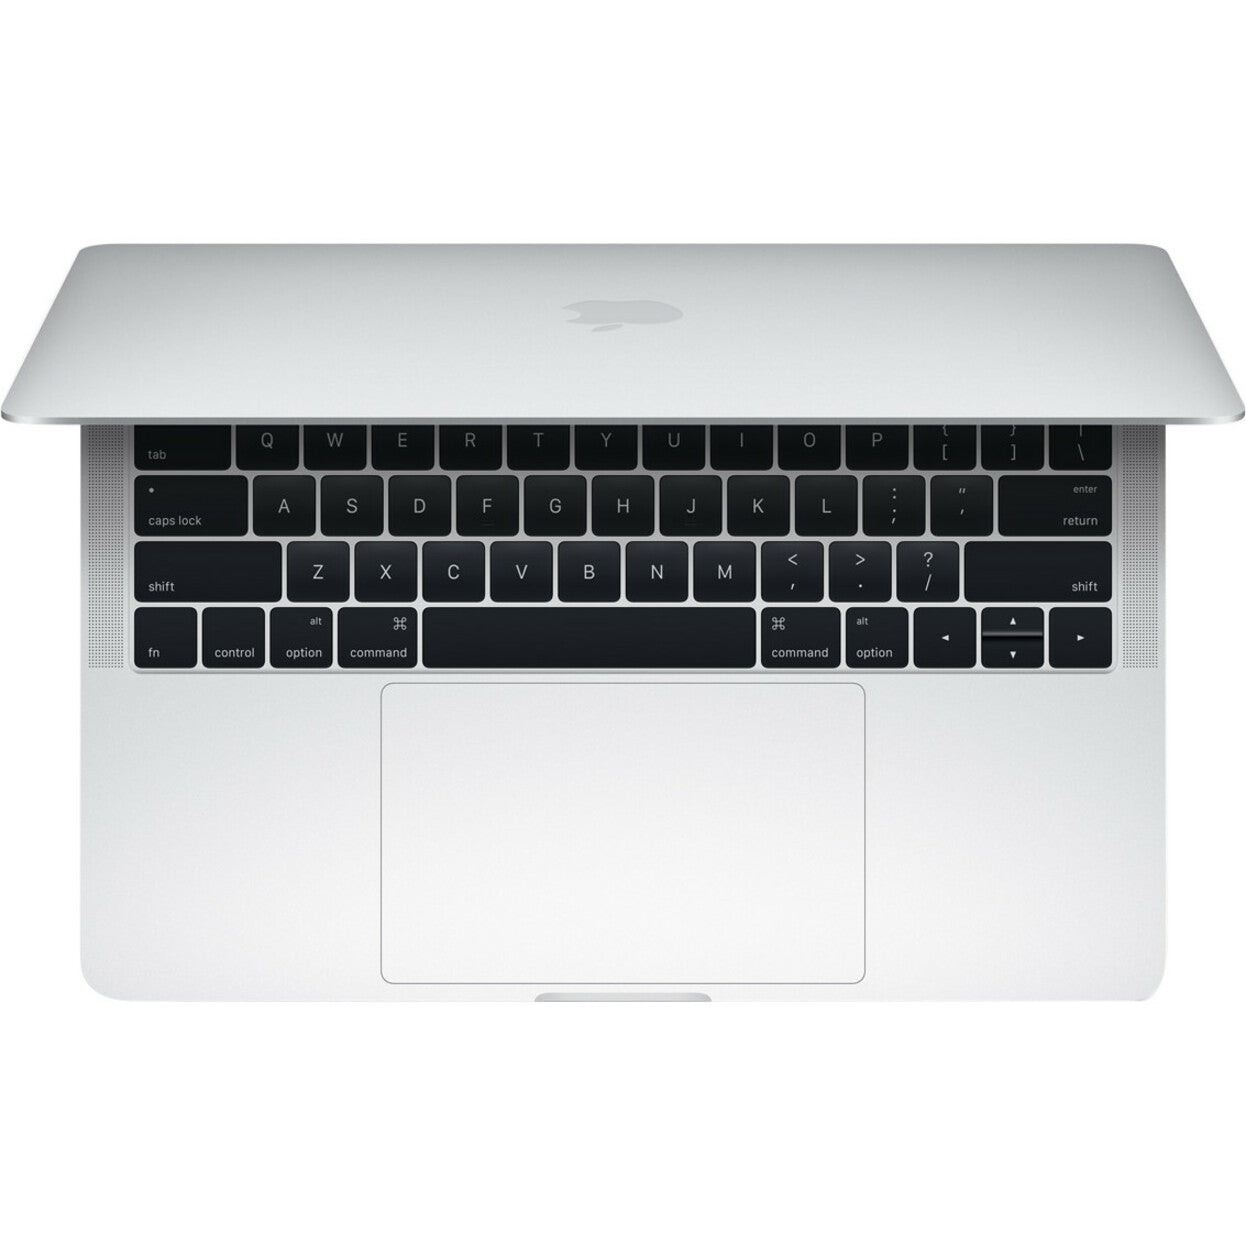 Apple MR962LL/A MacBook Pro 15-inch Silver, 2.2GHz Core i7, 16GB RAM, 256GB SSD